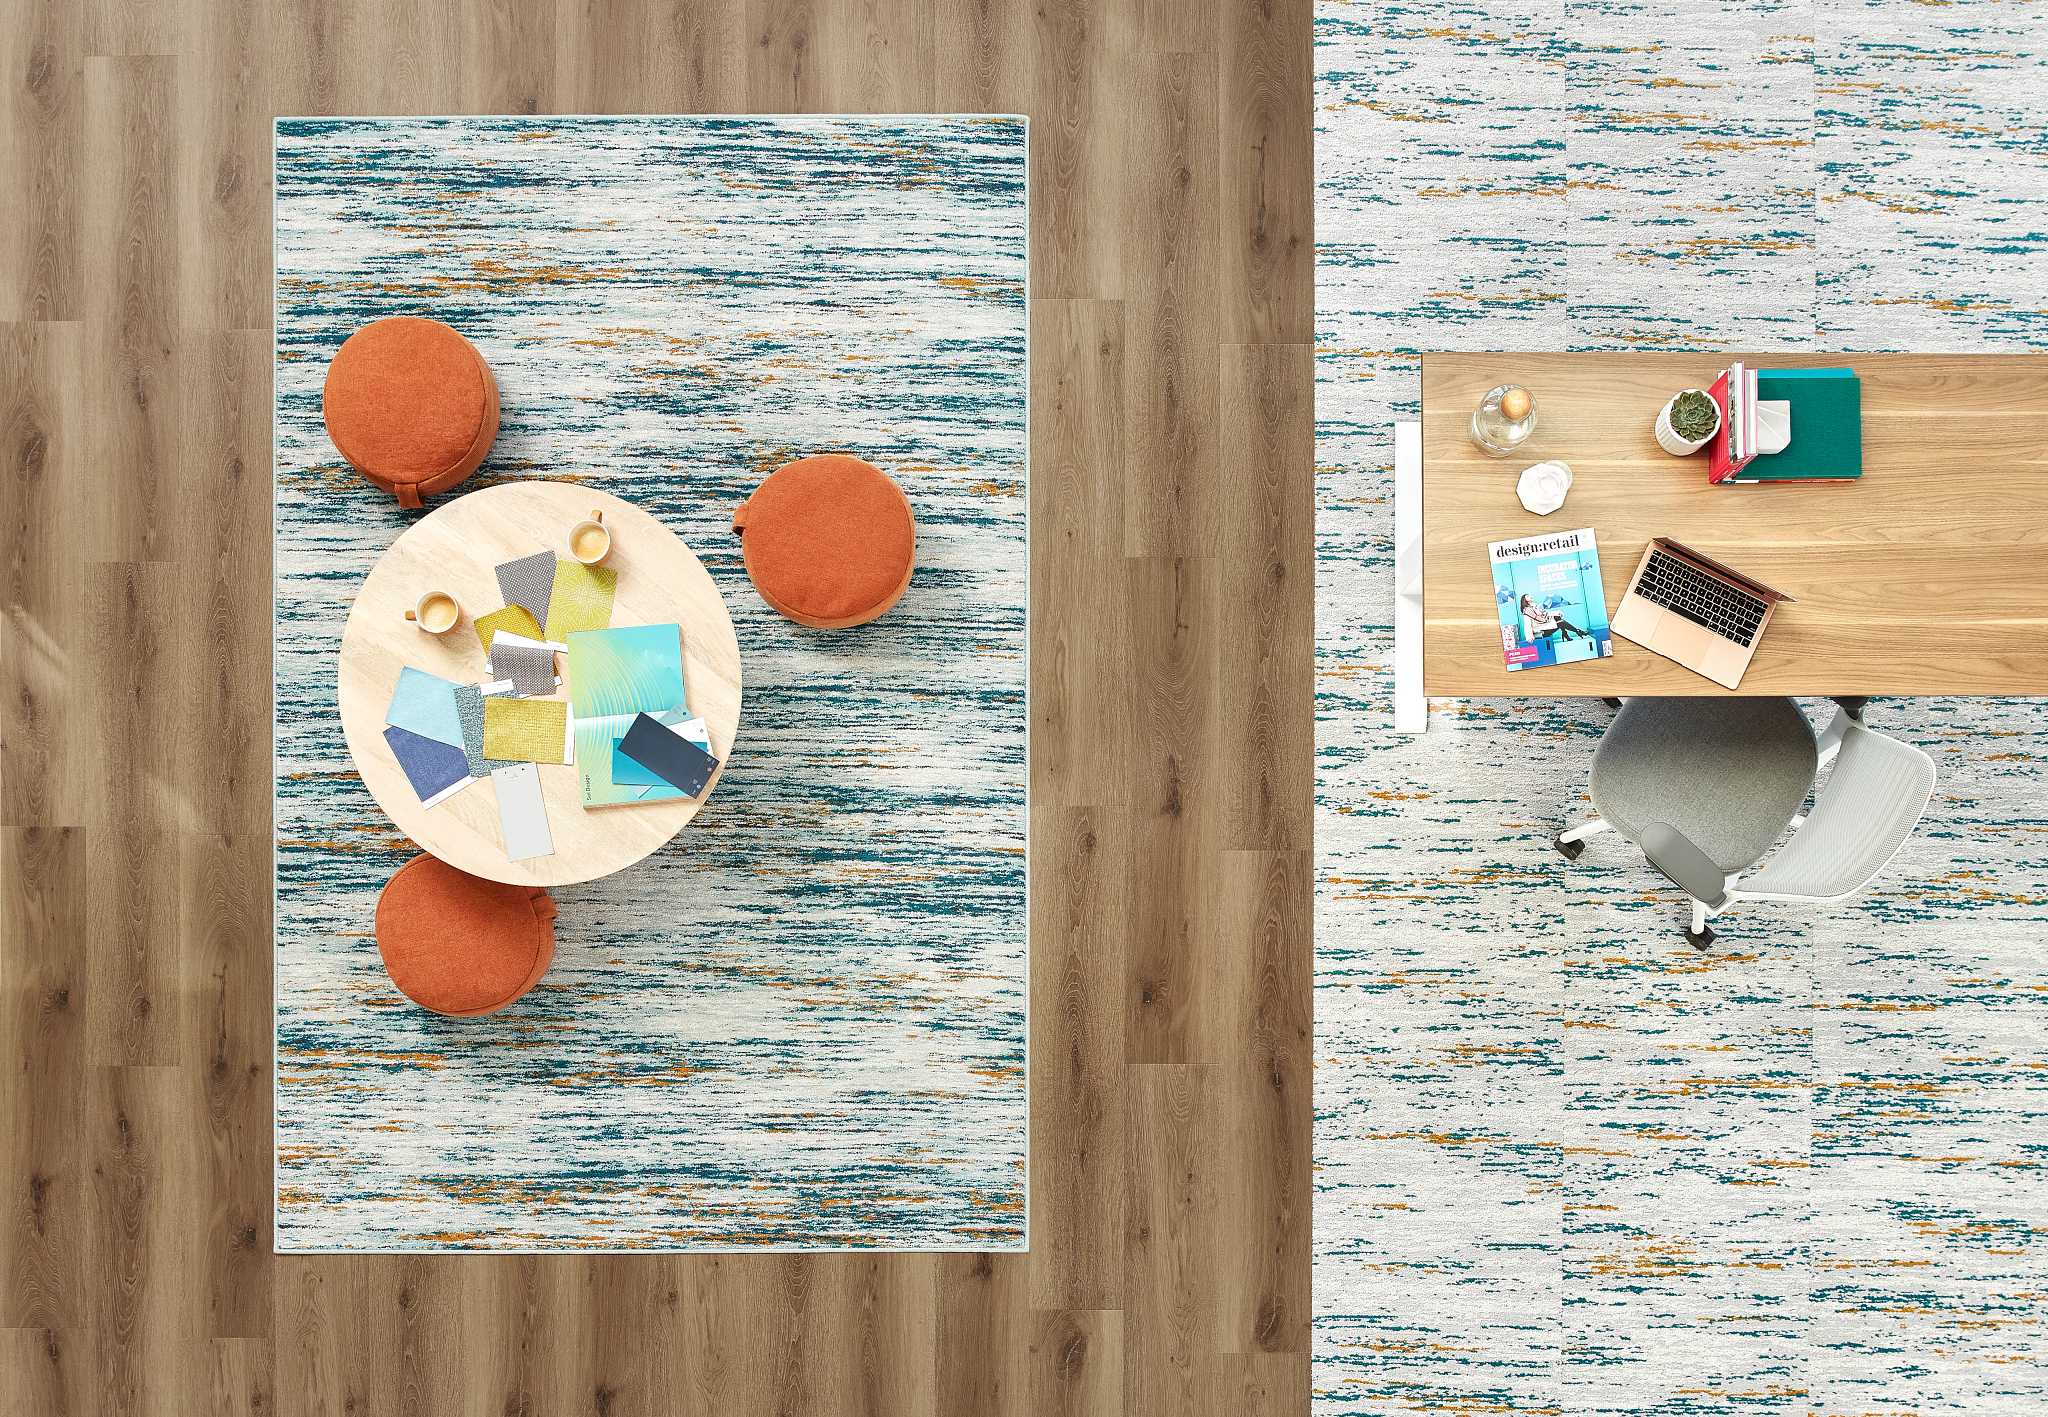 Verve 6×9 FT Rug in Vibrance + Zeal Carpet Tile in Vibrance-Color + Inlet II in Thatch